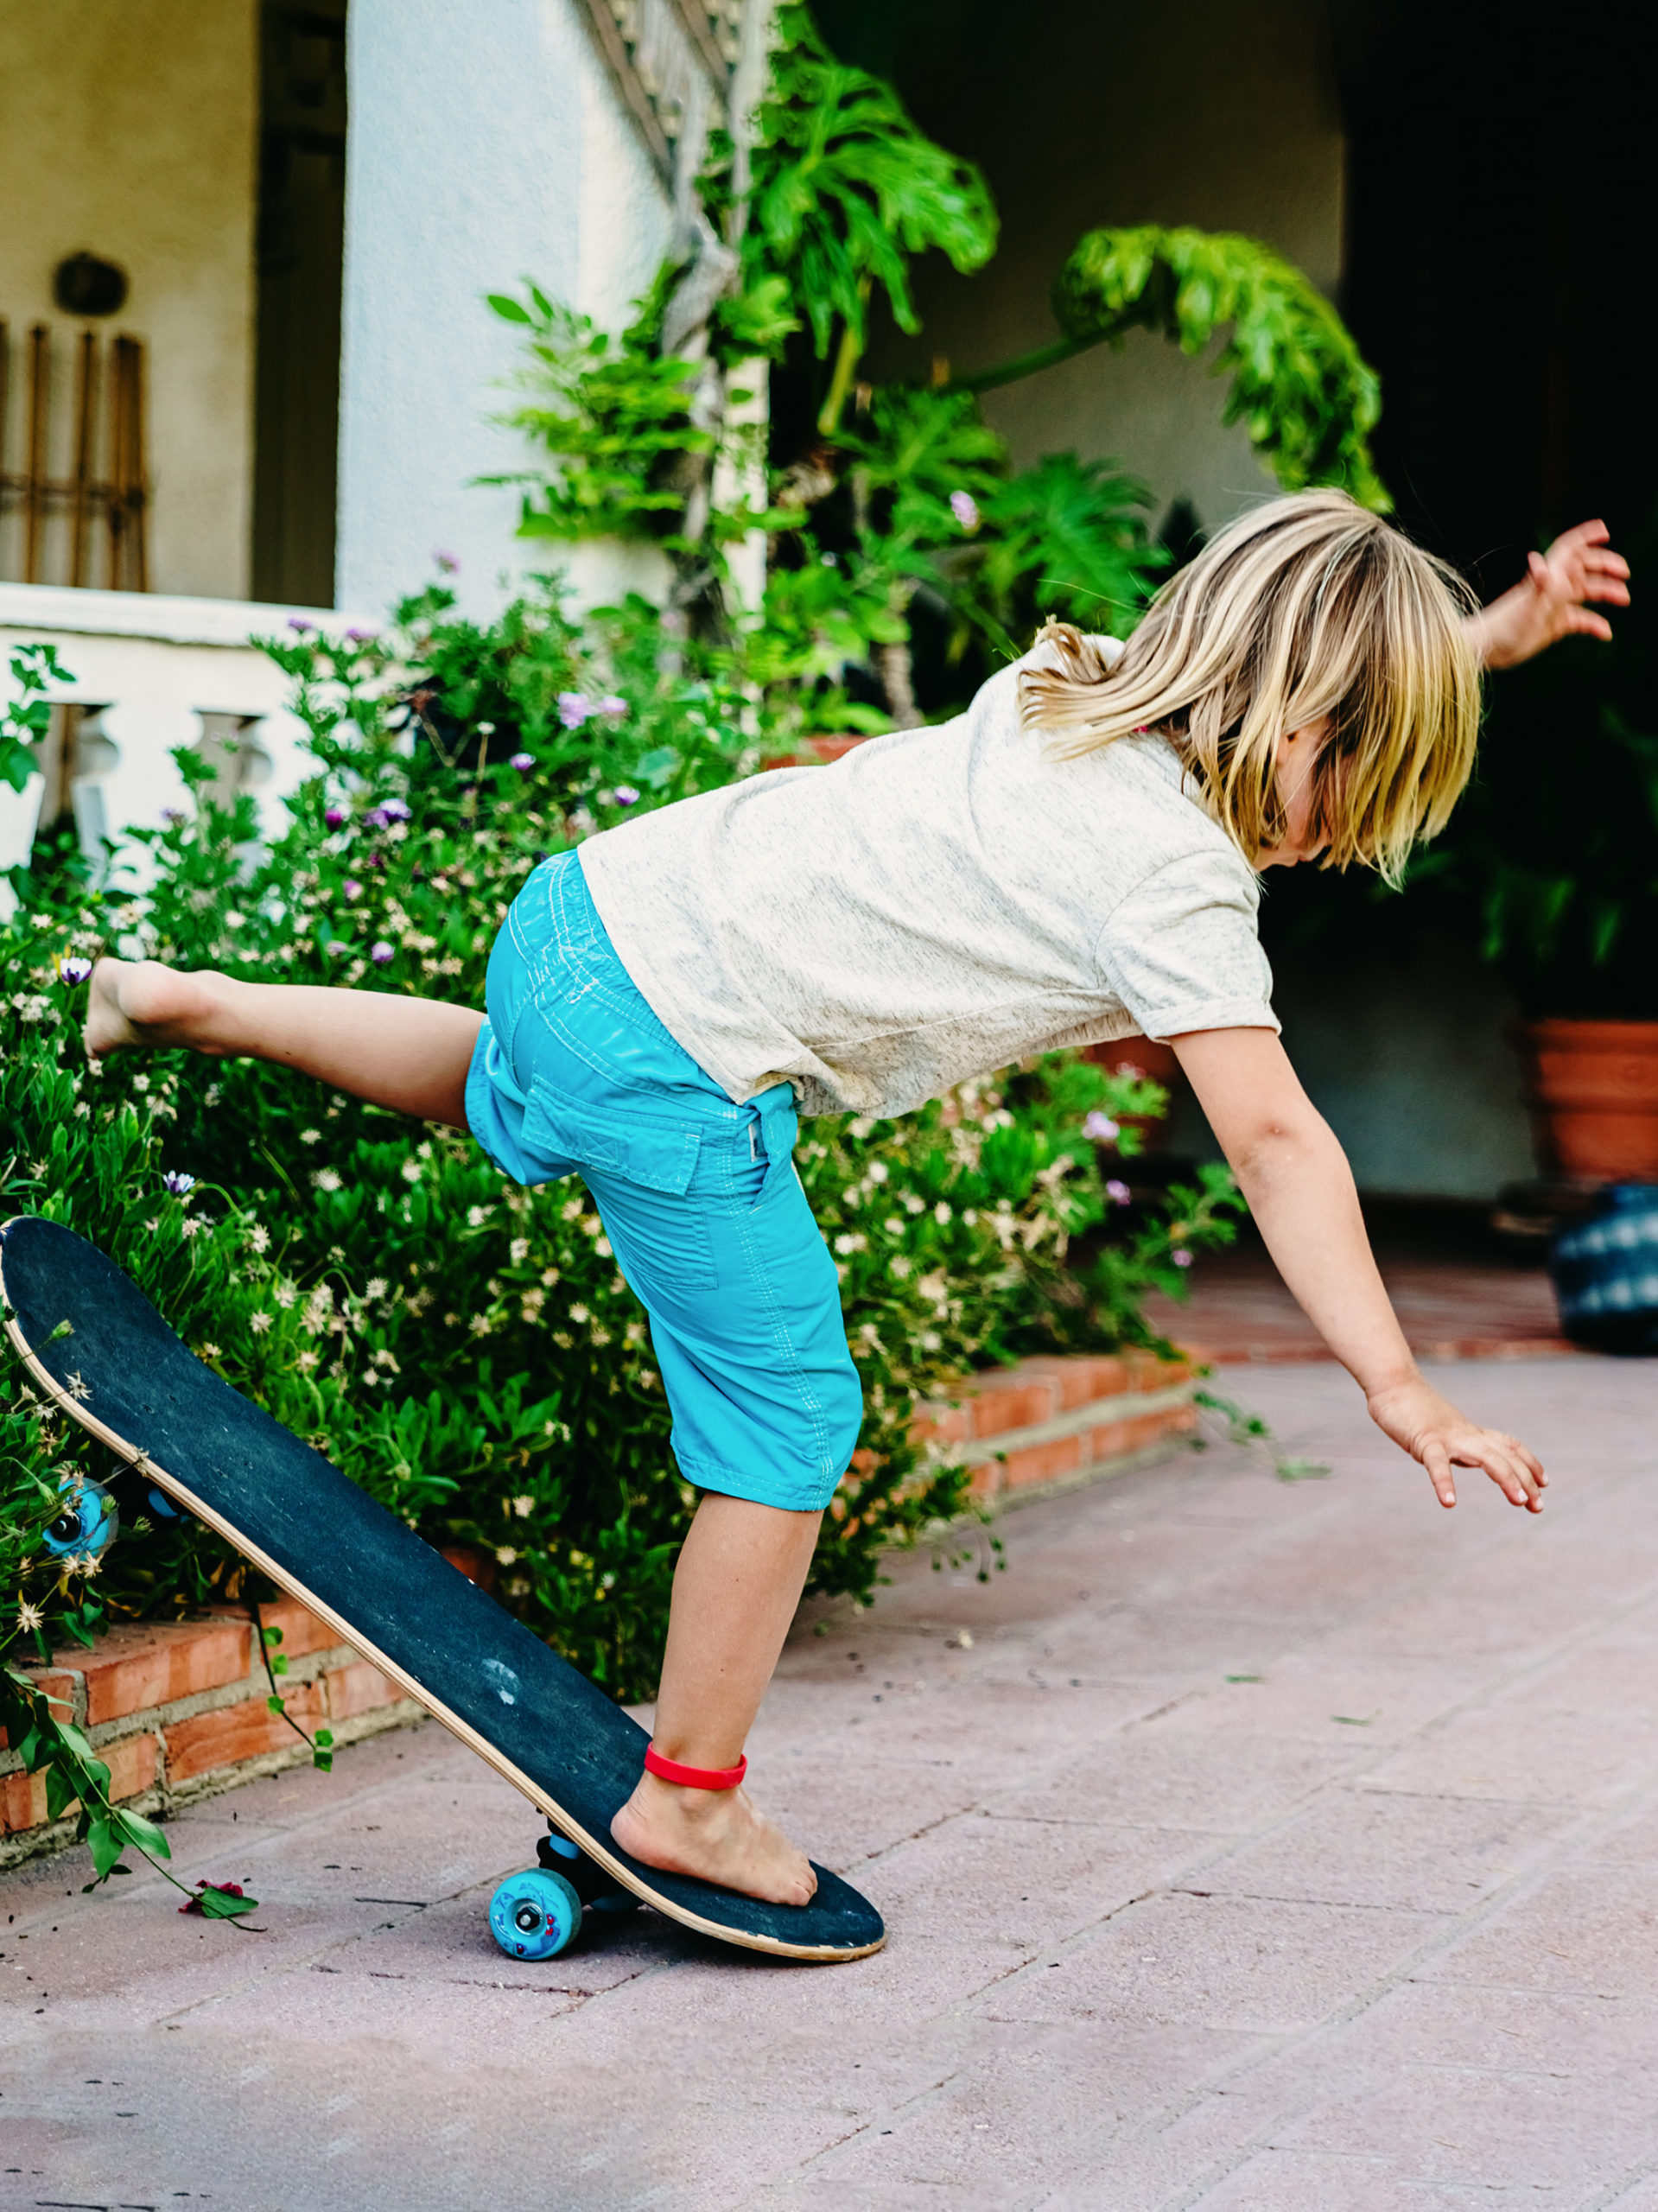 boy falls off of skateboard